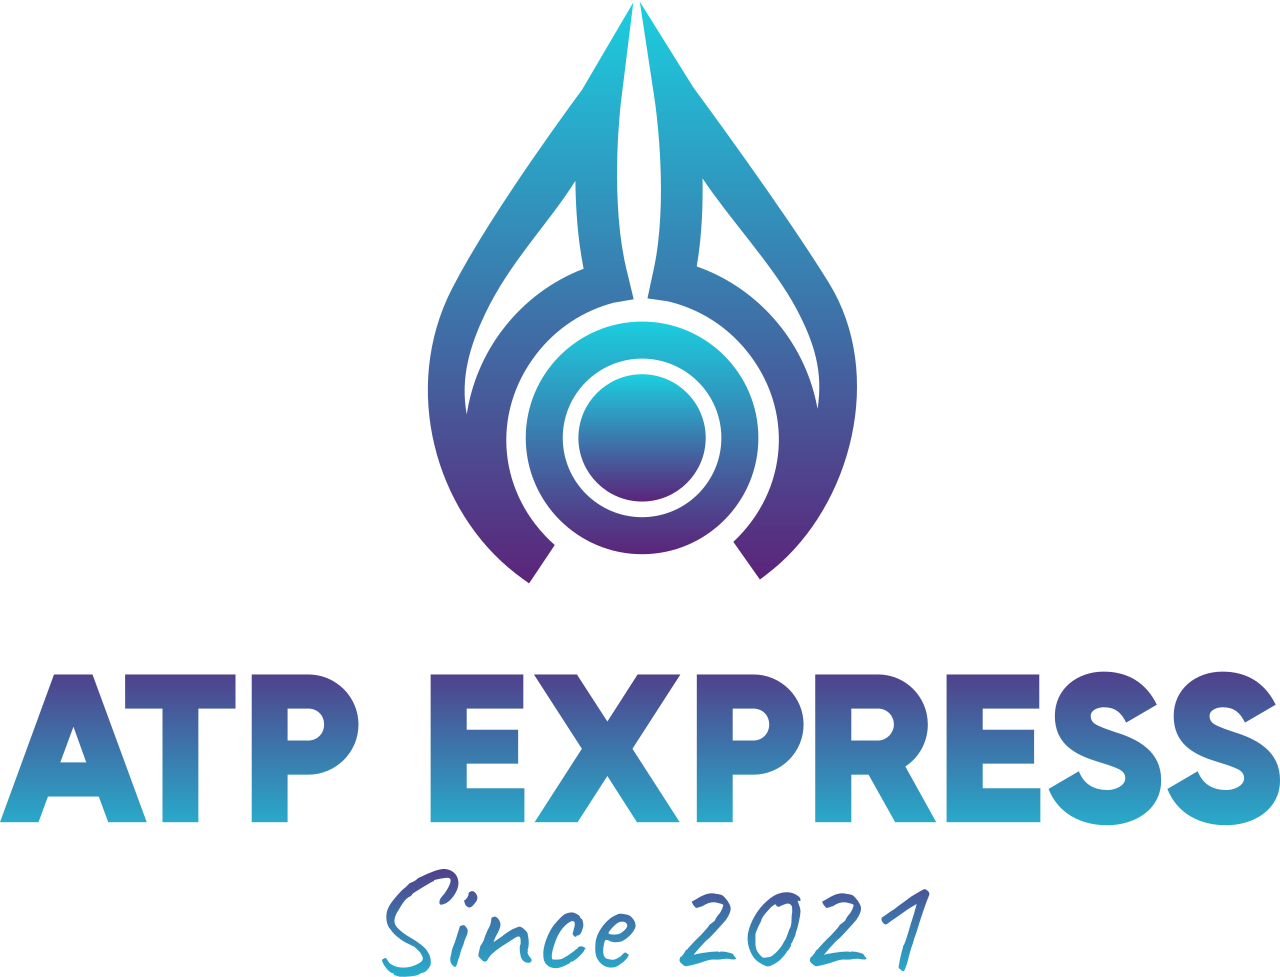 ATP EXPRESS's web page